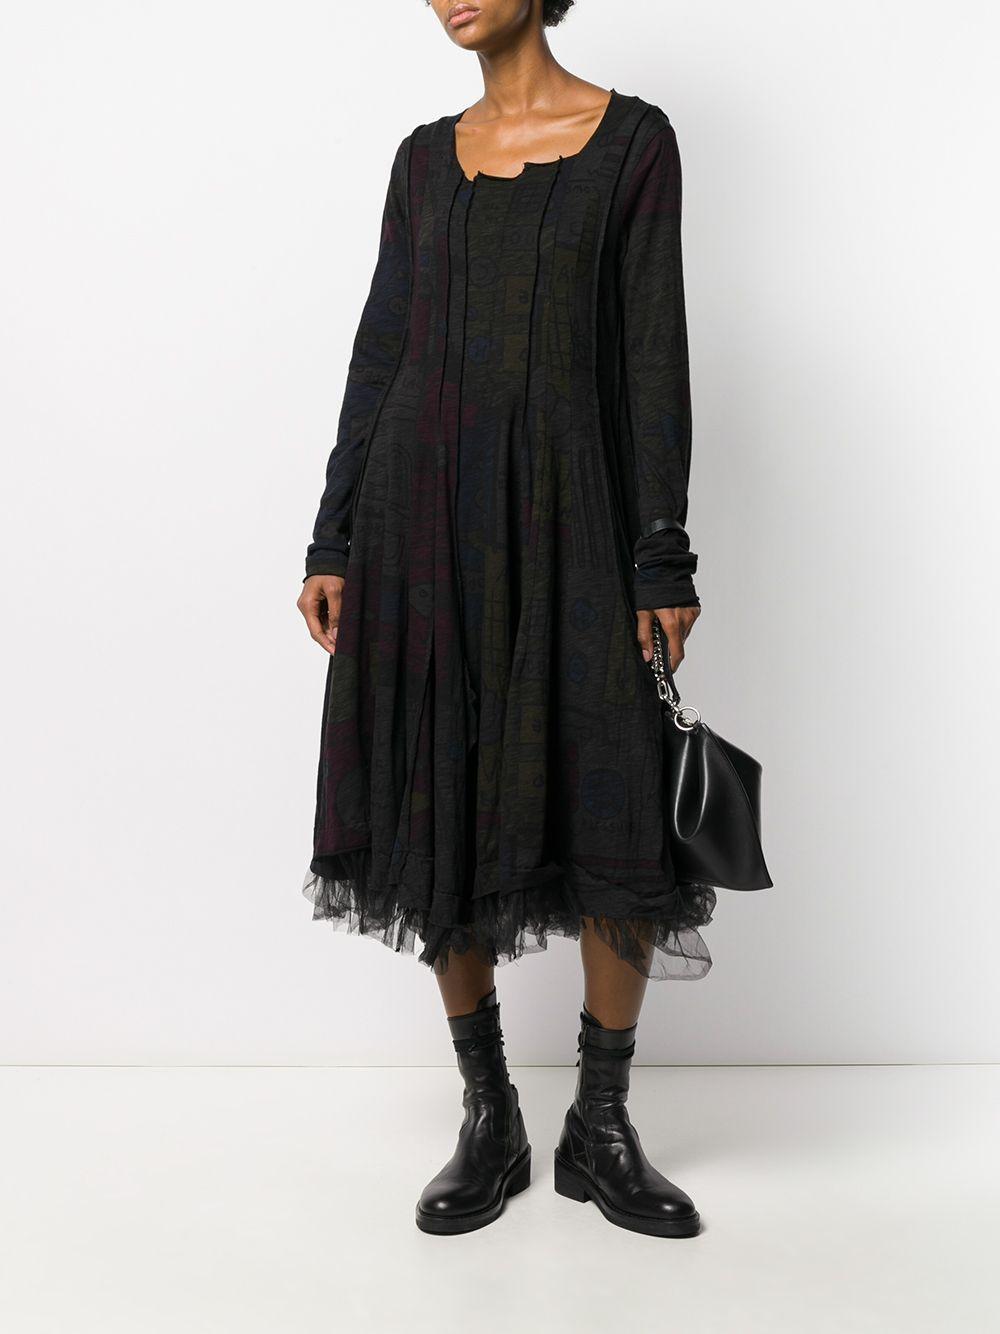 Rundholz Black Label Printed Mesh Hem Dress in Black | Lyst